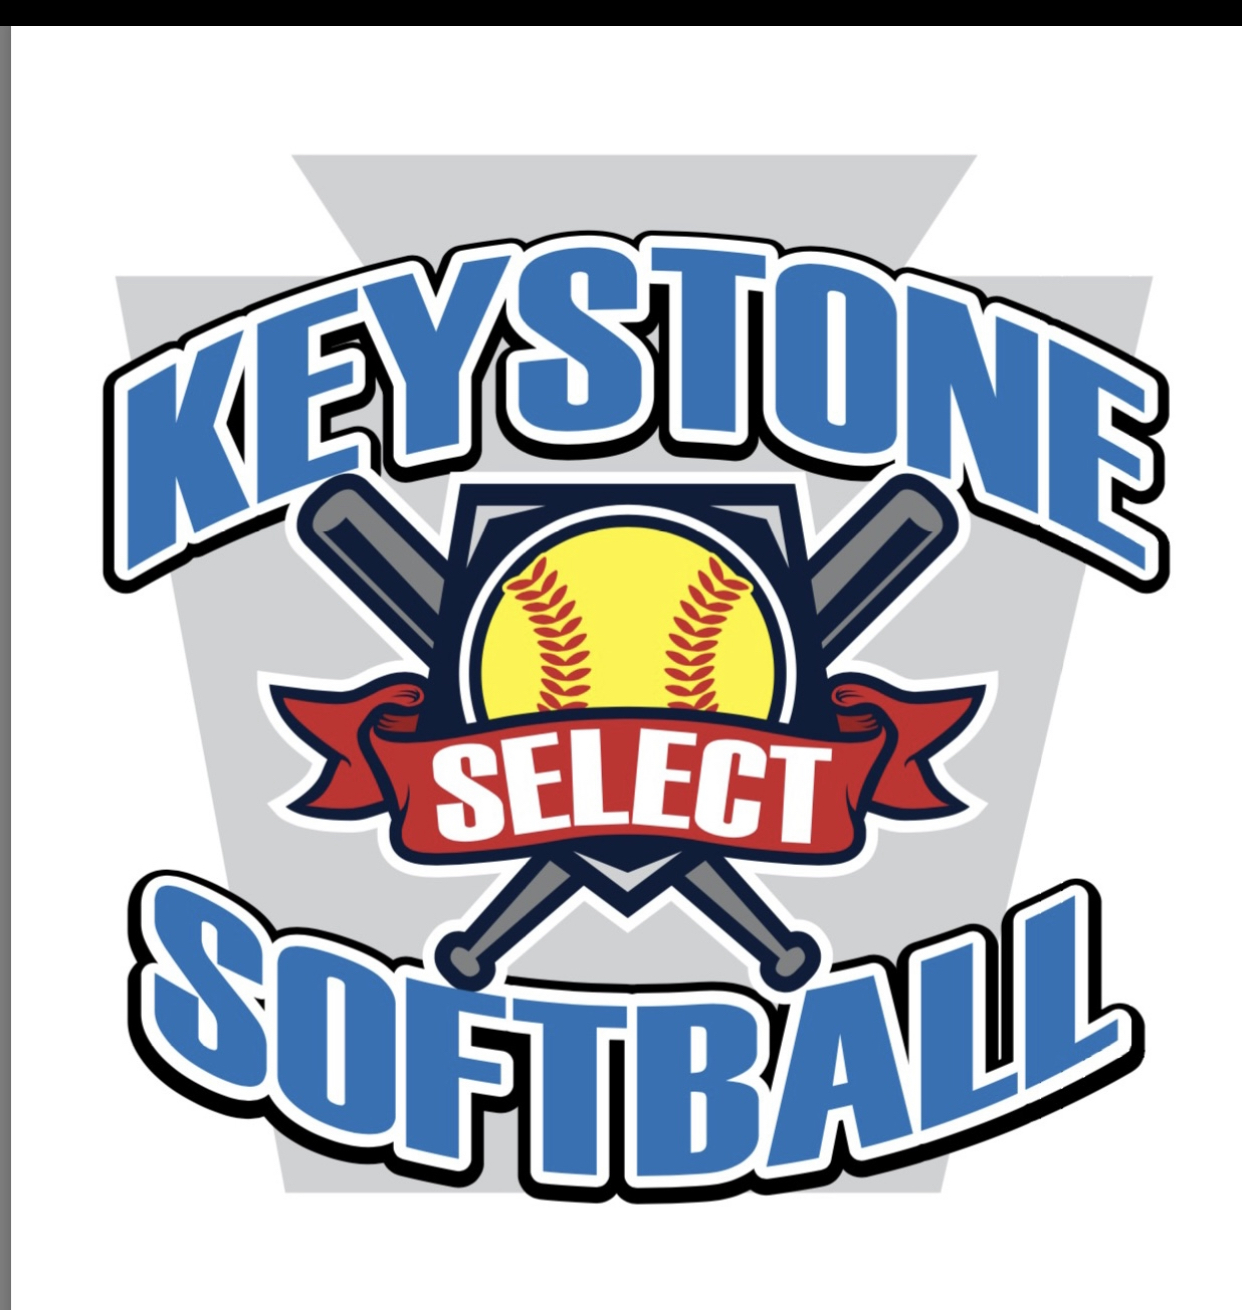 Keystone Select Softball Fireworks and Fastballs Drums-Scranton Area Logo